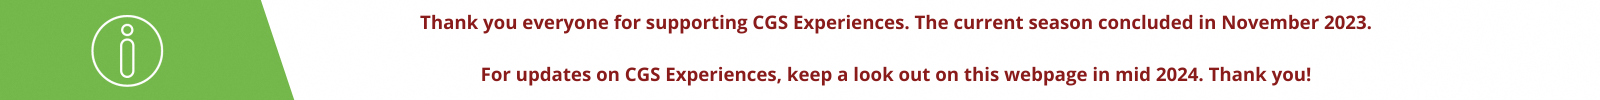 CGS Experiences - Announcement